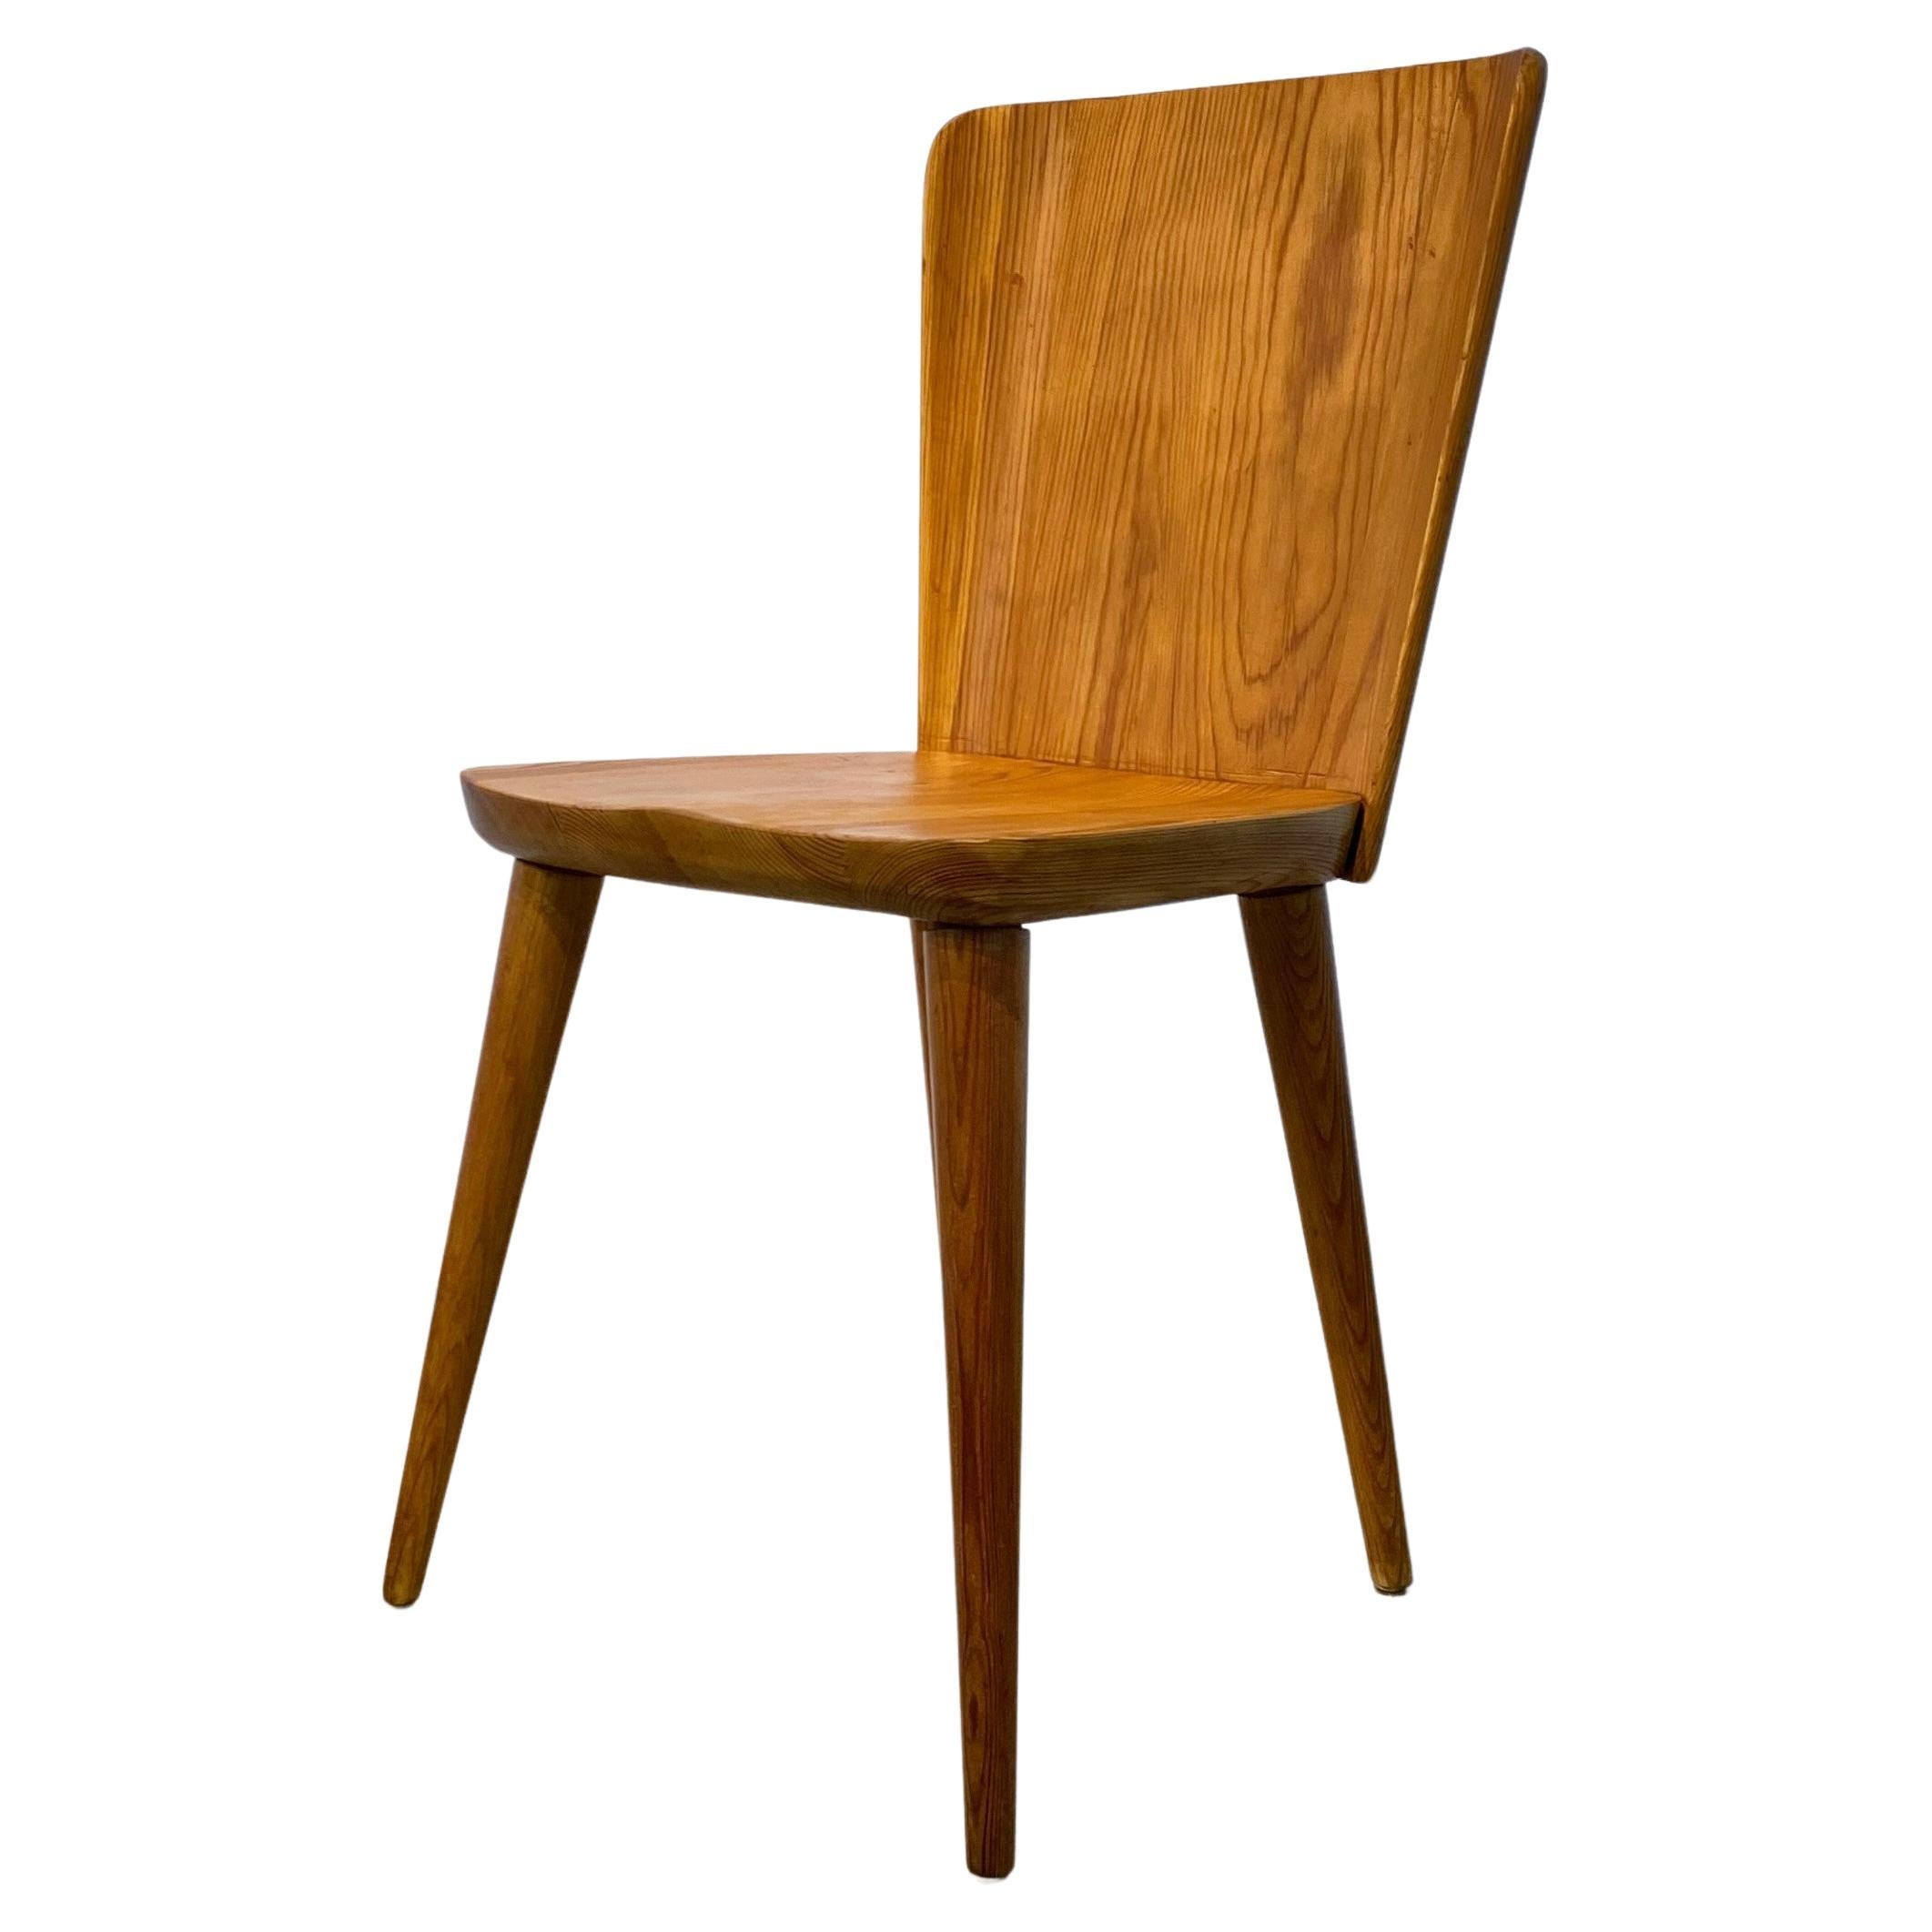 Göran Malmvall pine chair 510 by Karl Andersson & Söner, Sweden, 1940s